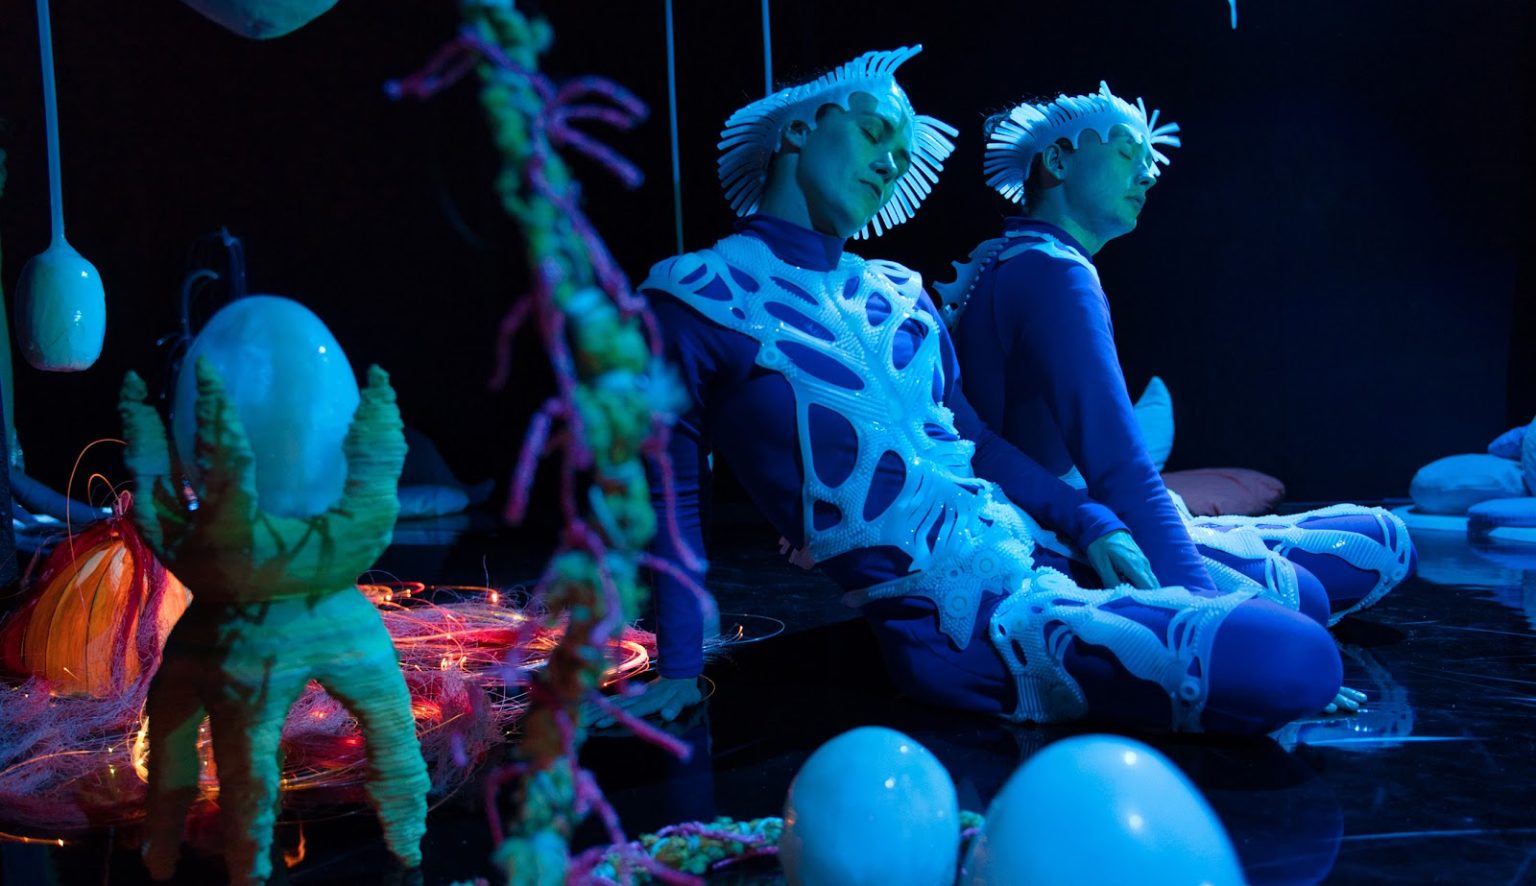 The performance “Ocean” - part of Dans Baby Dans Festival 2022 at the dance theater Bora Bora.